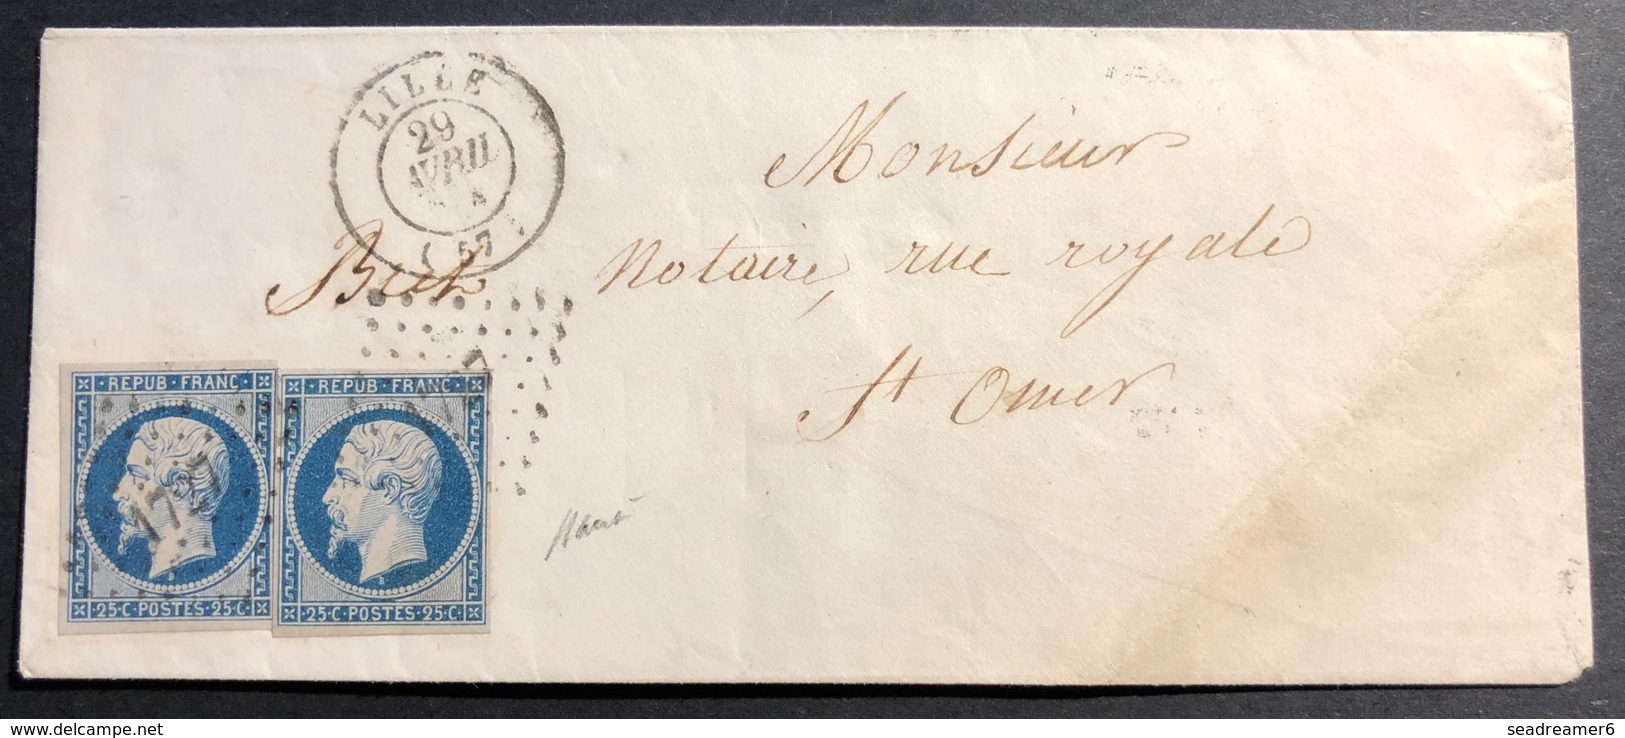 1852 Louis Napoléon N°10c 25c X 2 Enveloppe De Lille PC1727 Pour St Omer - 1852 Louis-Napoléon